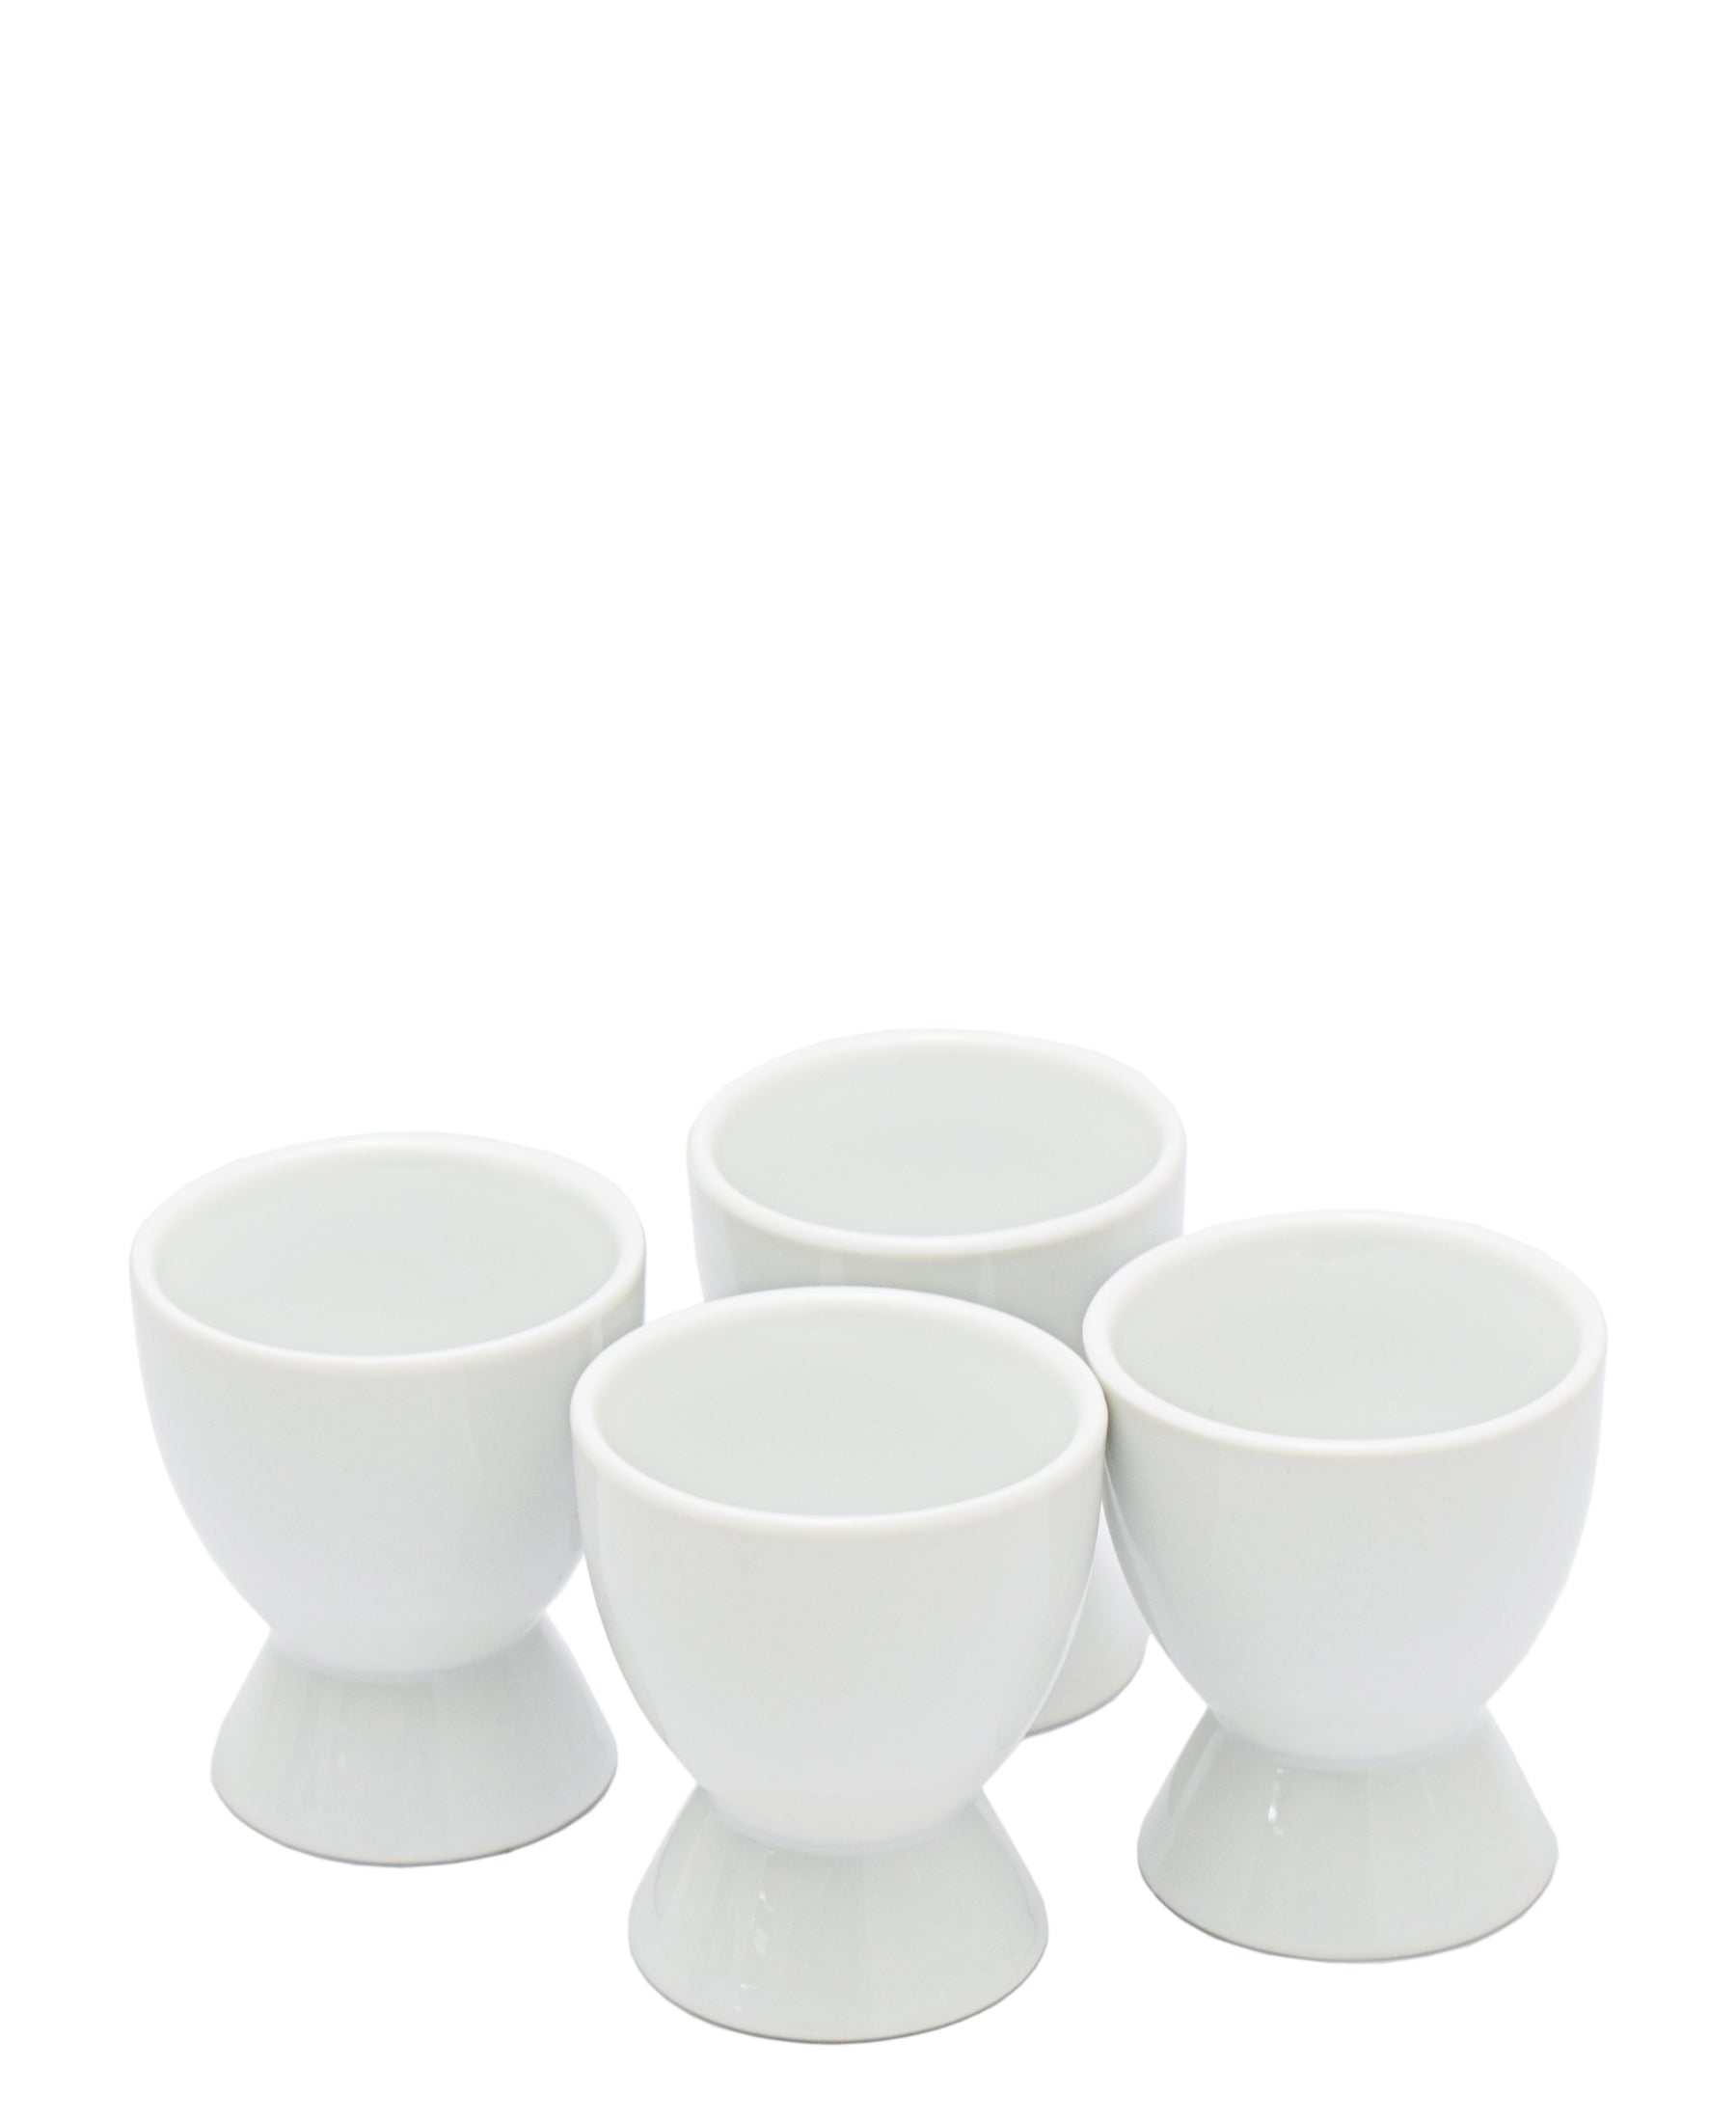 Eetrite Egg Cup Set 4 Piece - White